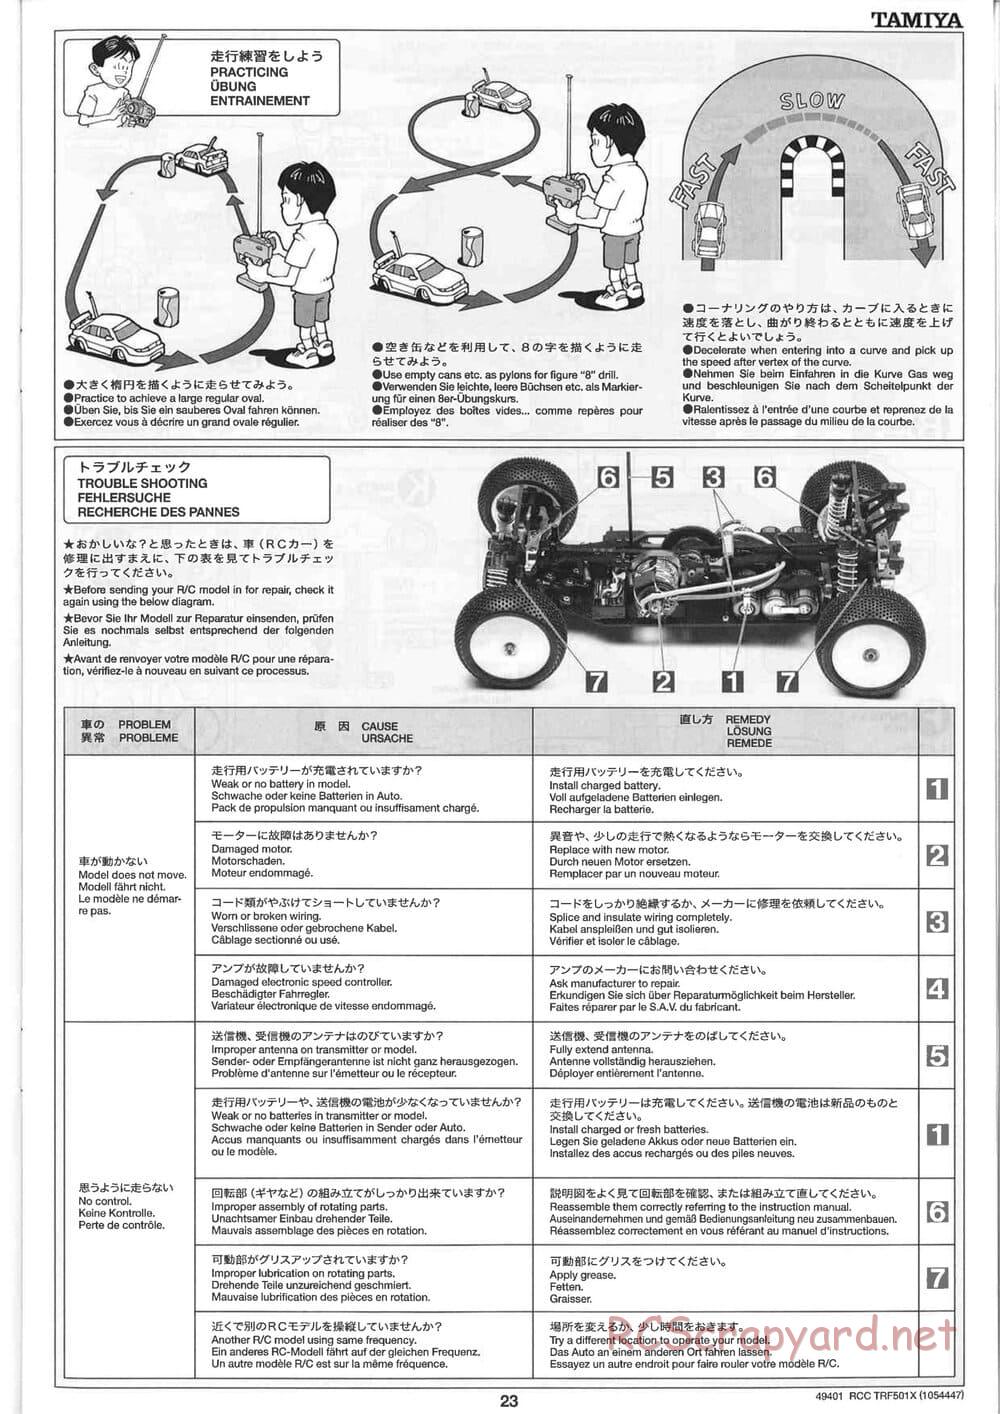 Tamiya - TRF501X Chassis - Manual - Page 23